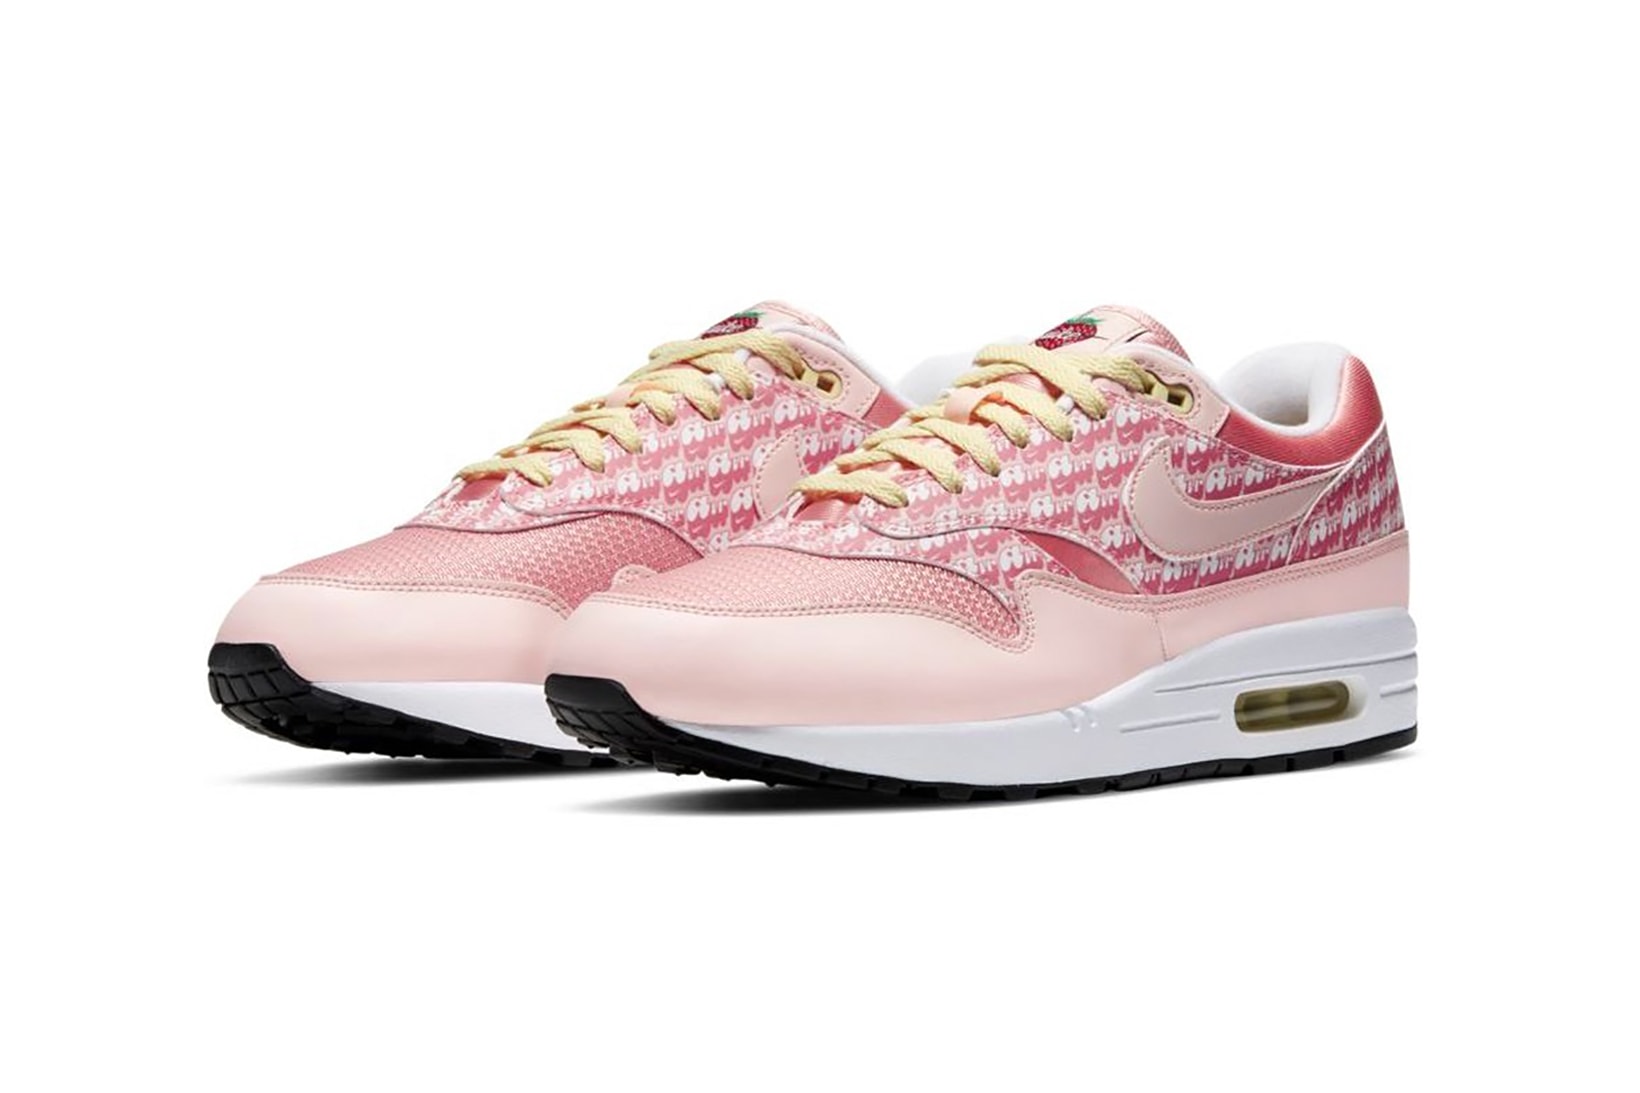 nike air max 1 sneakers pink white yellow strawberry lemonade shoes footwear sneakerhead